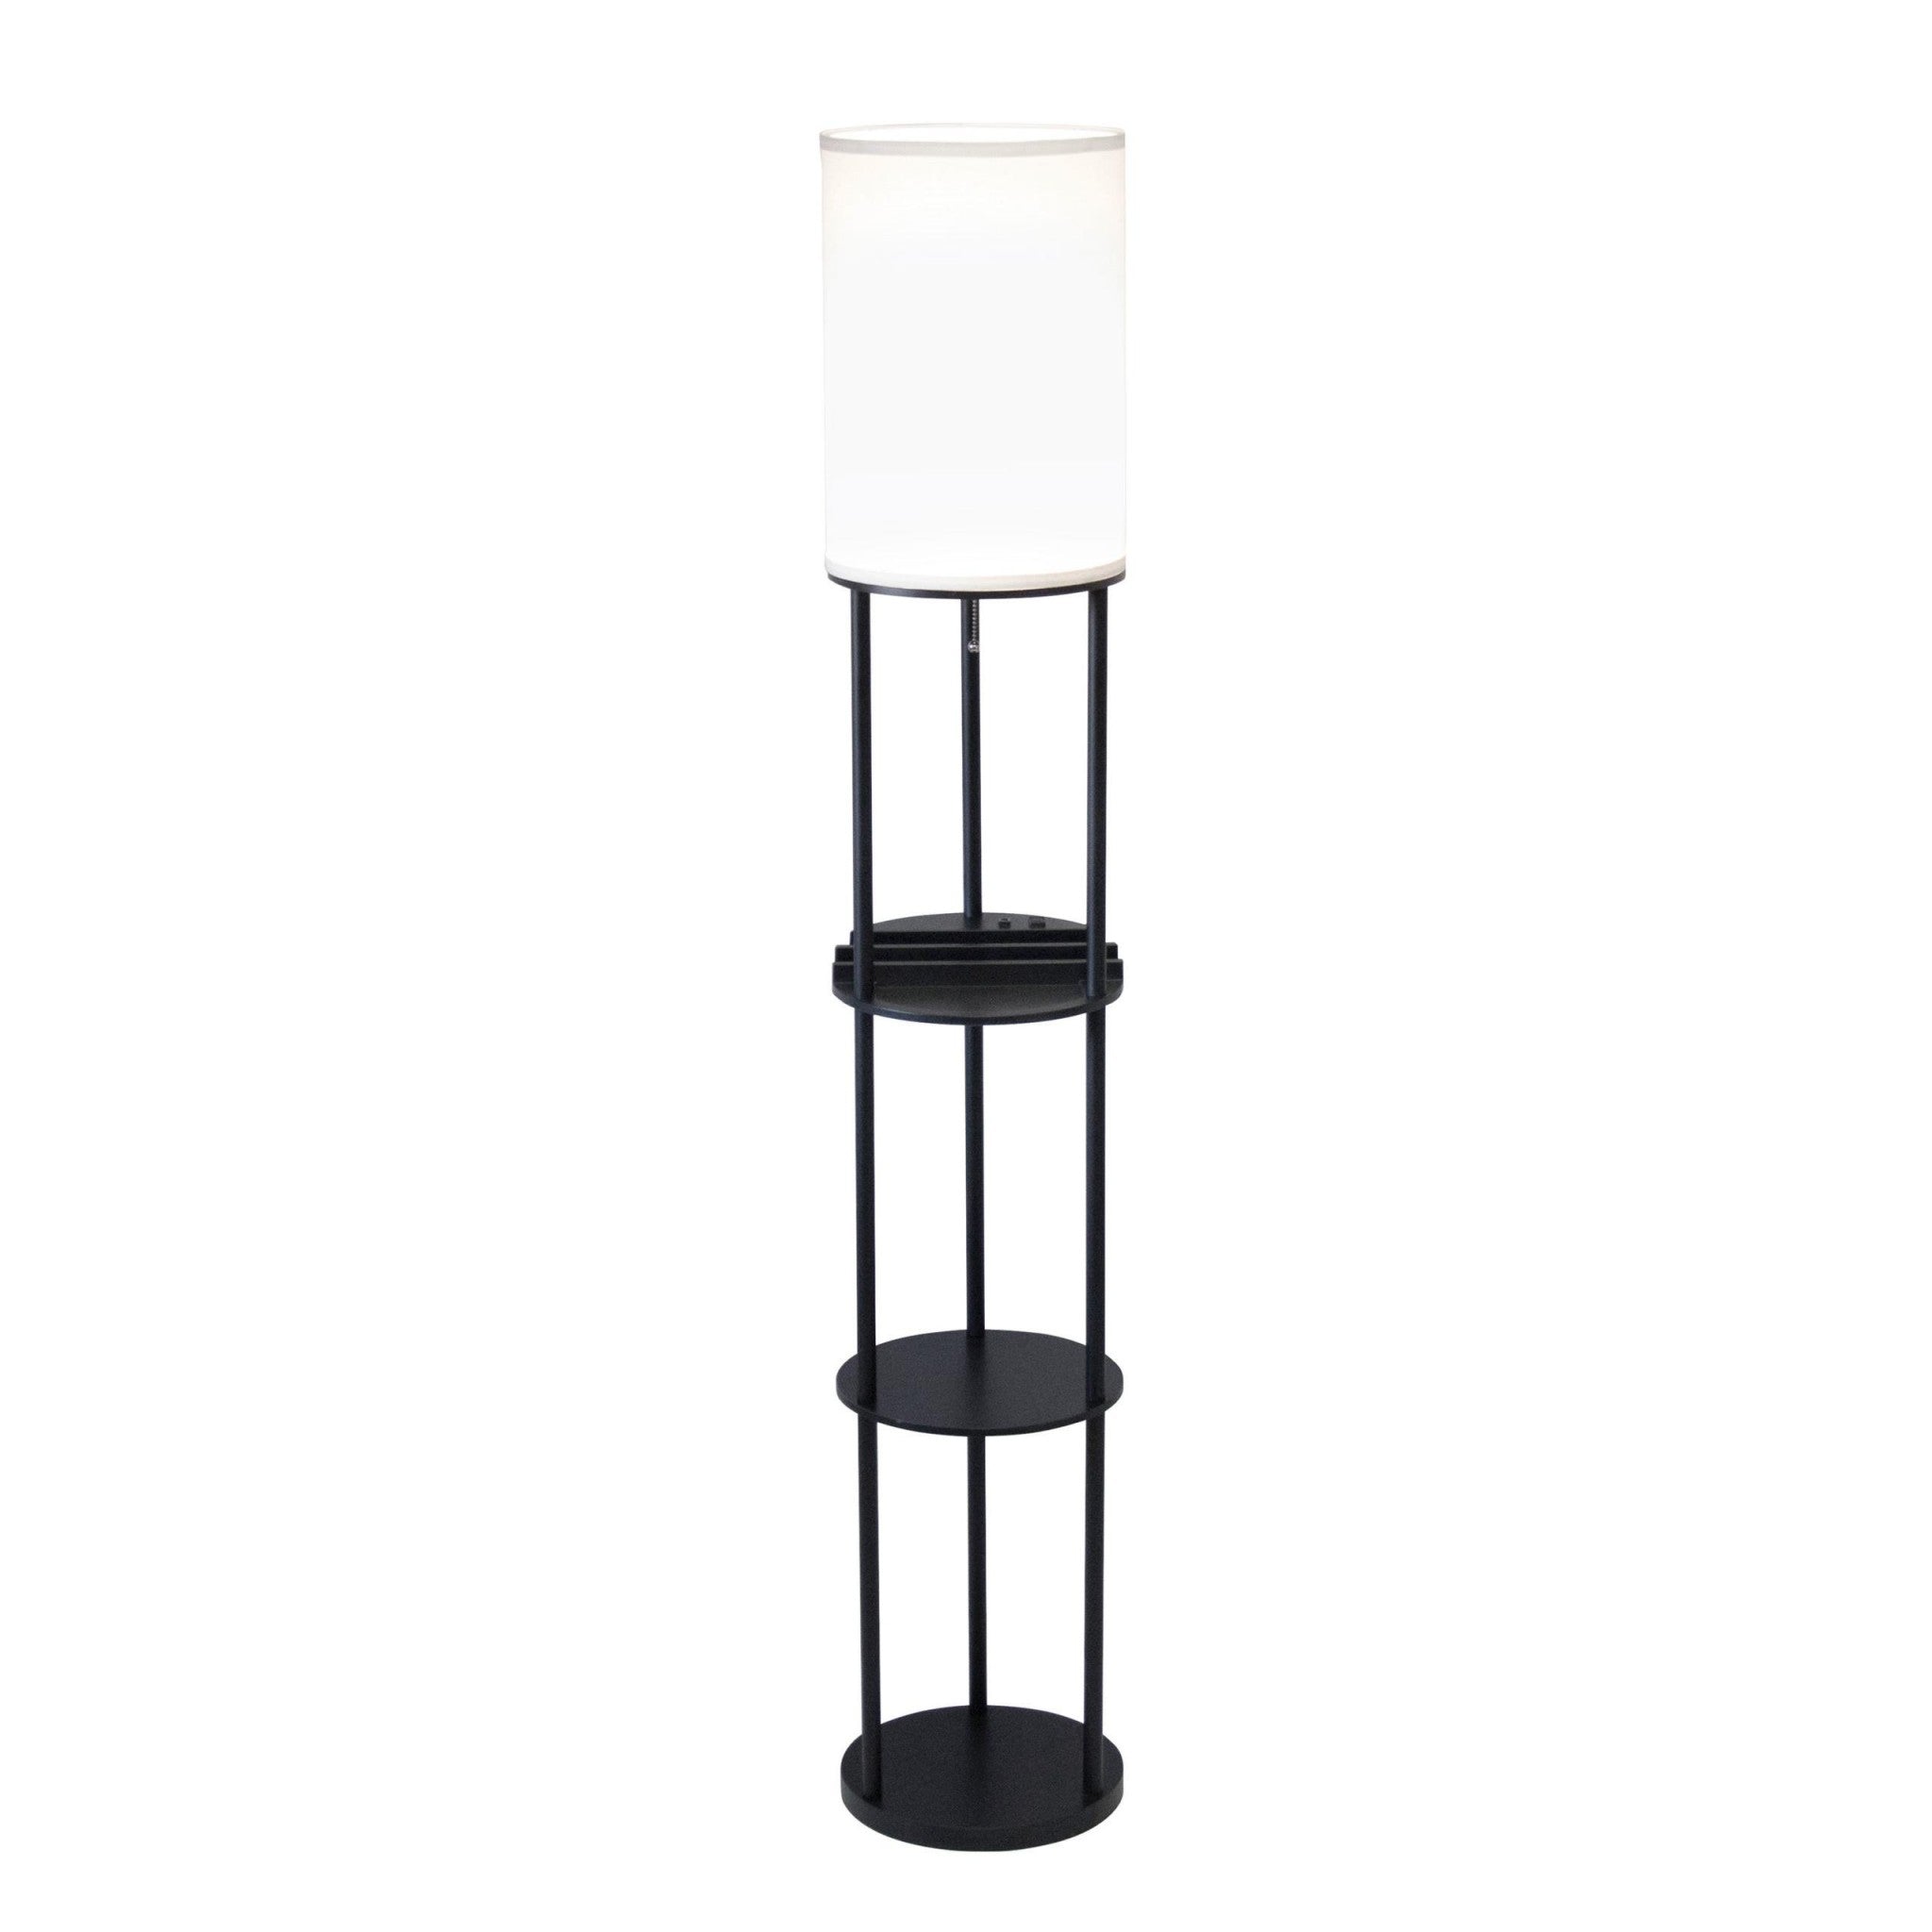 Black Wood Floor Lamp With Circular Usb Charging Station Shelf